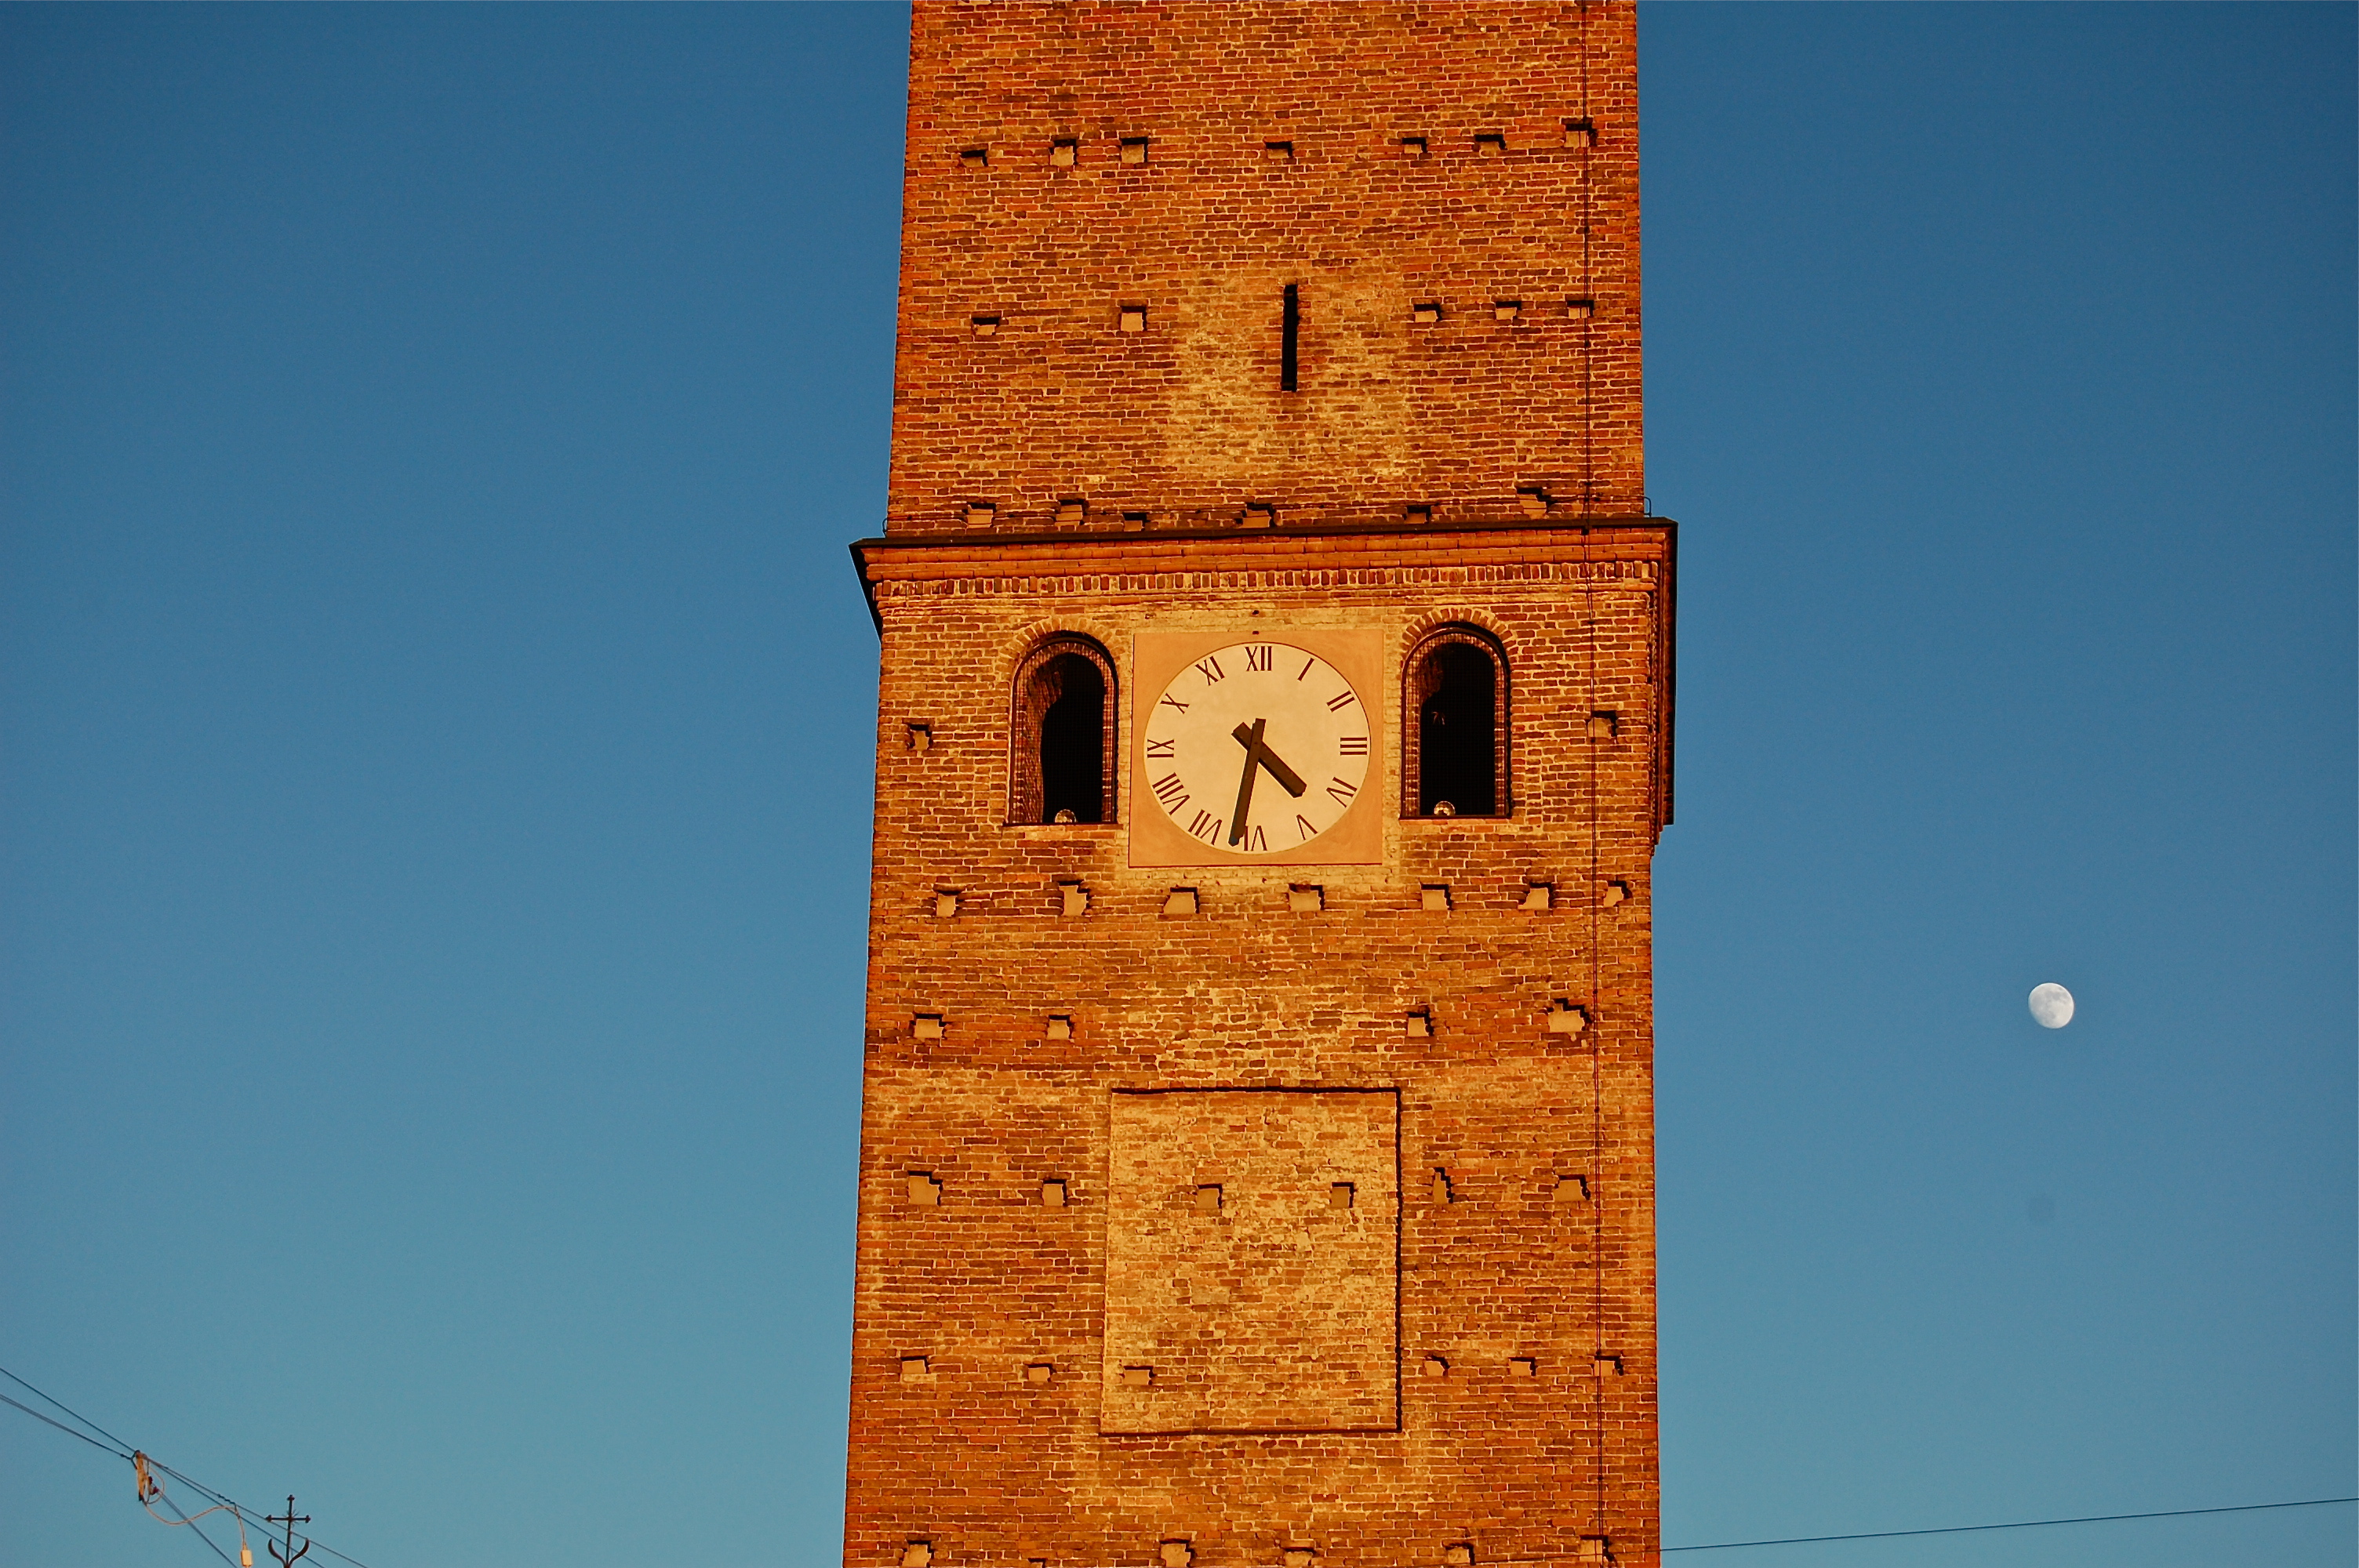 Moon tower. Mozzanica (BG), Gennaio 2012